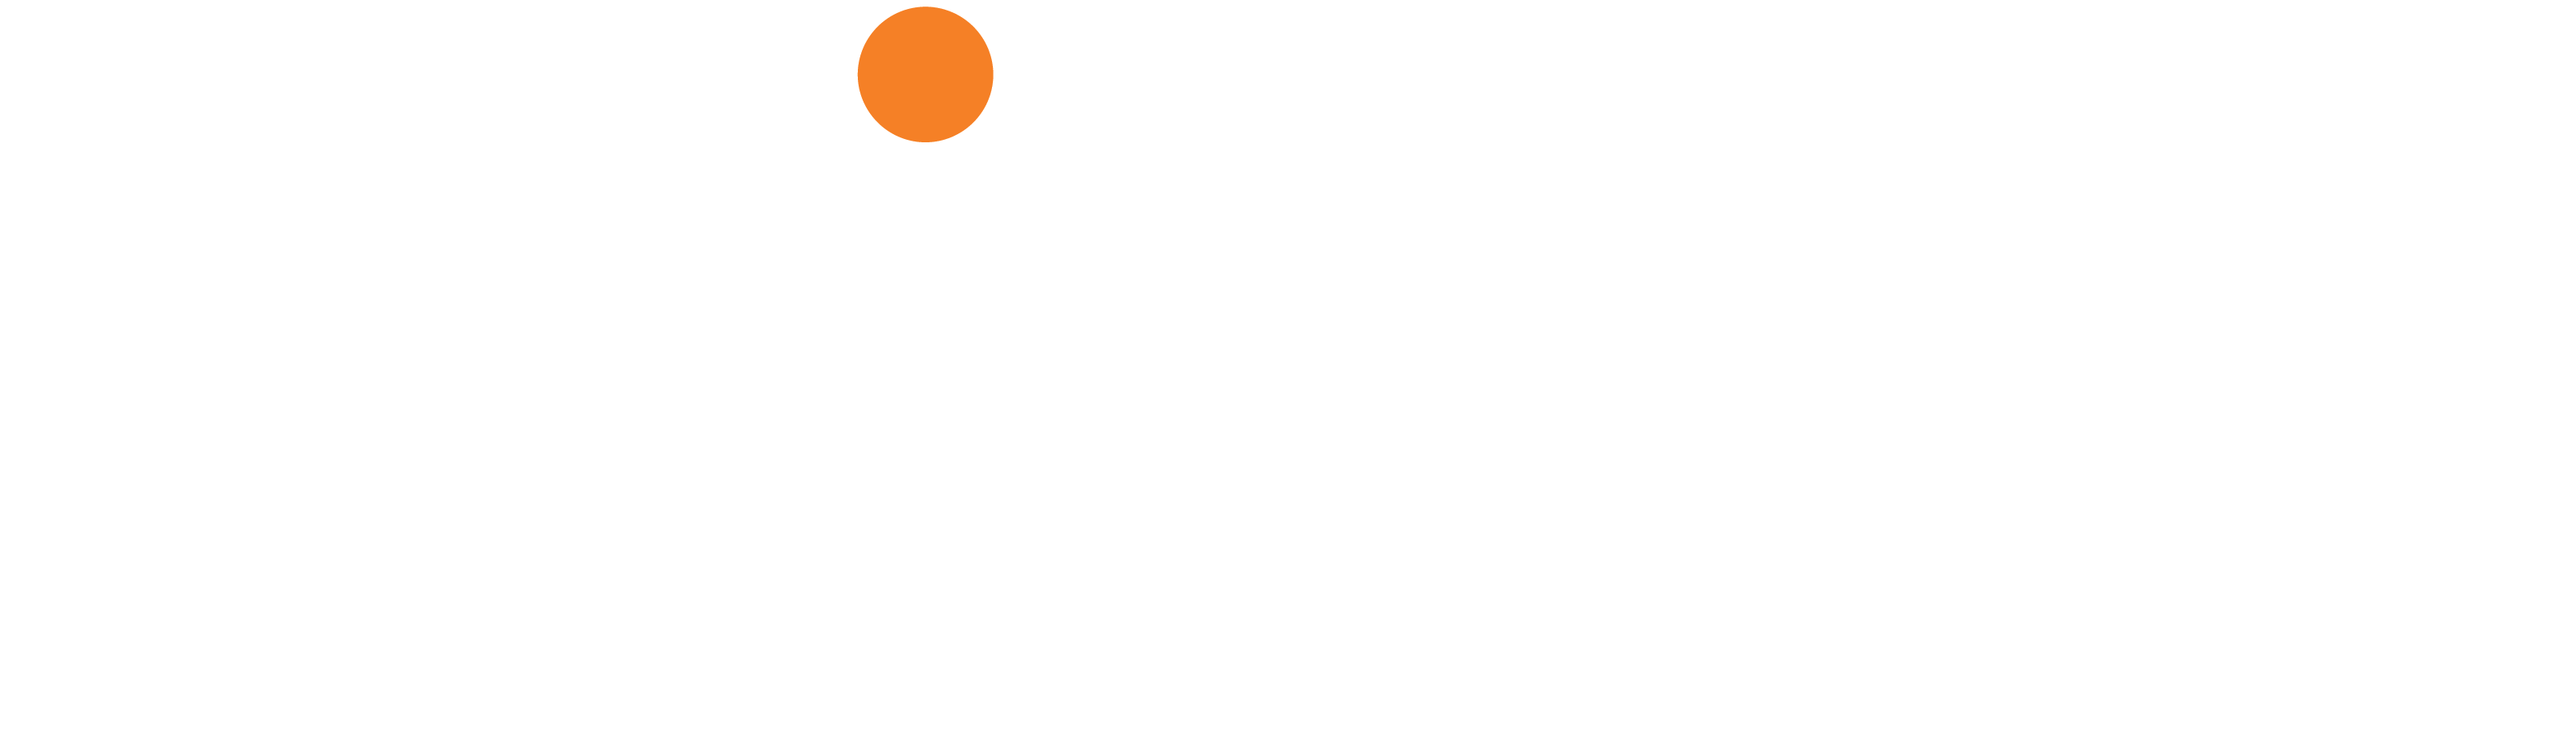 TenthDegree Technologies, LLC